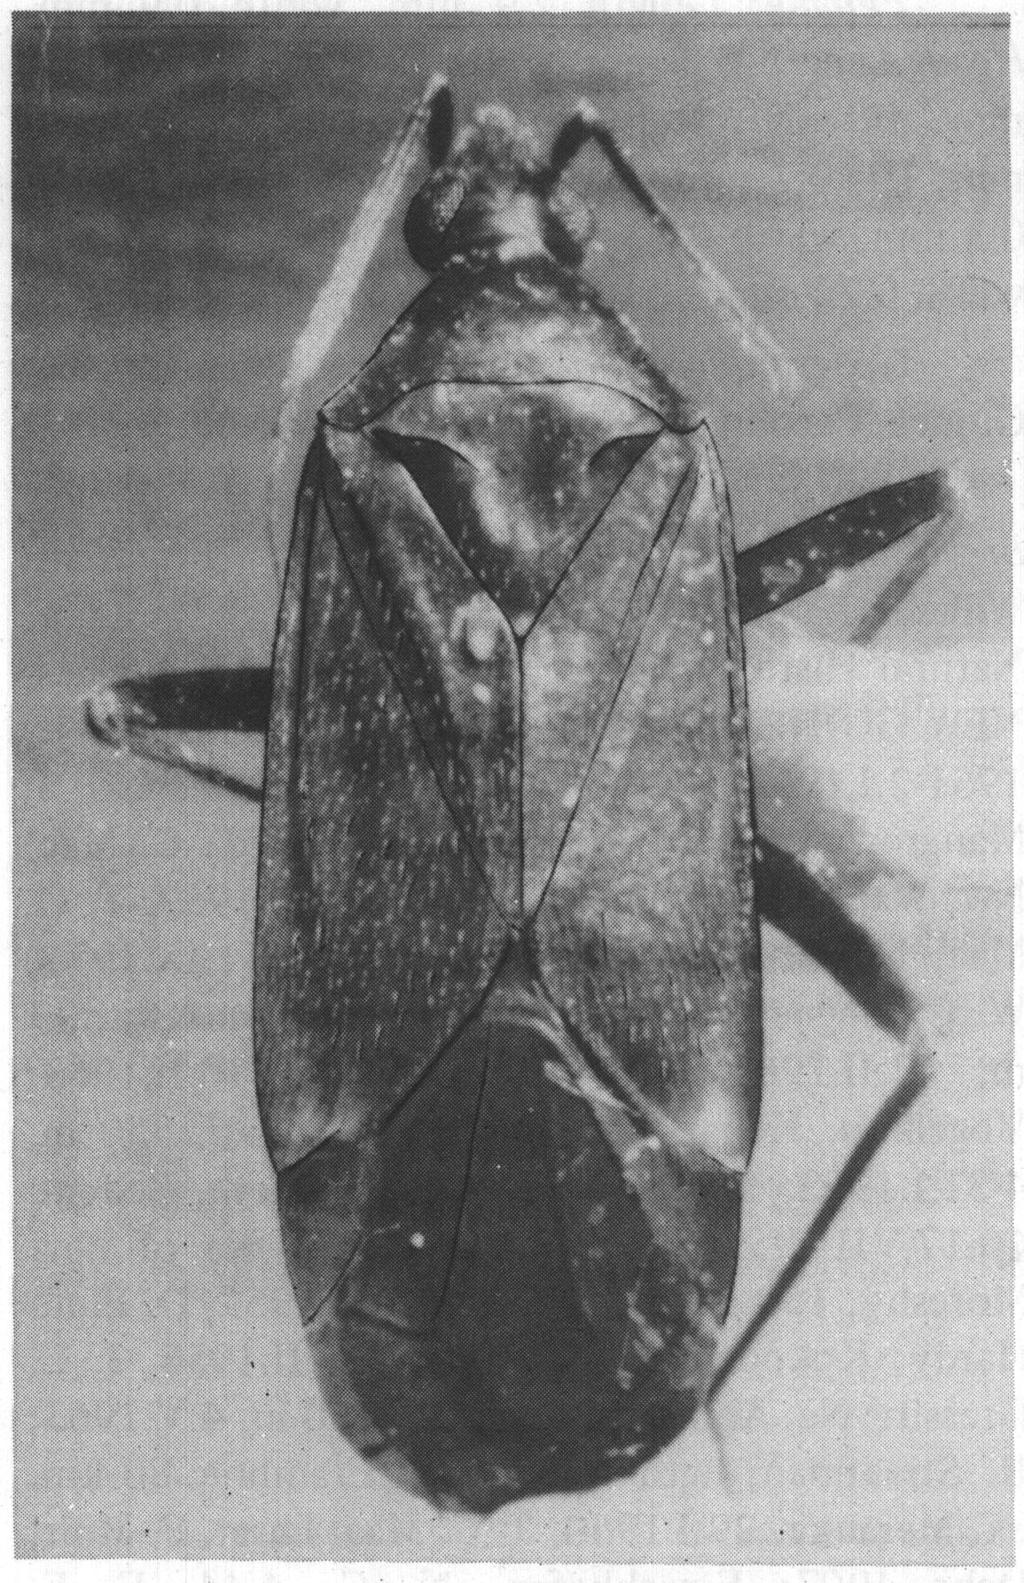 CYLAPINAE OF PAPUA NEW GUINEA 137 Male: Length 4.8 mm, width 1.4 mm. Head: Length' 0.4 mpi, width 0.6 mm, vertex 0.24 mm. Antenna: Segment I, length 0,6 mm; II, 1.4 mm; III, 0.8 mm; IV, broken.